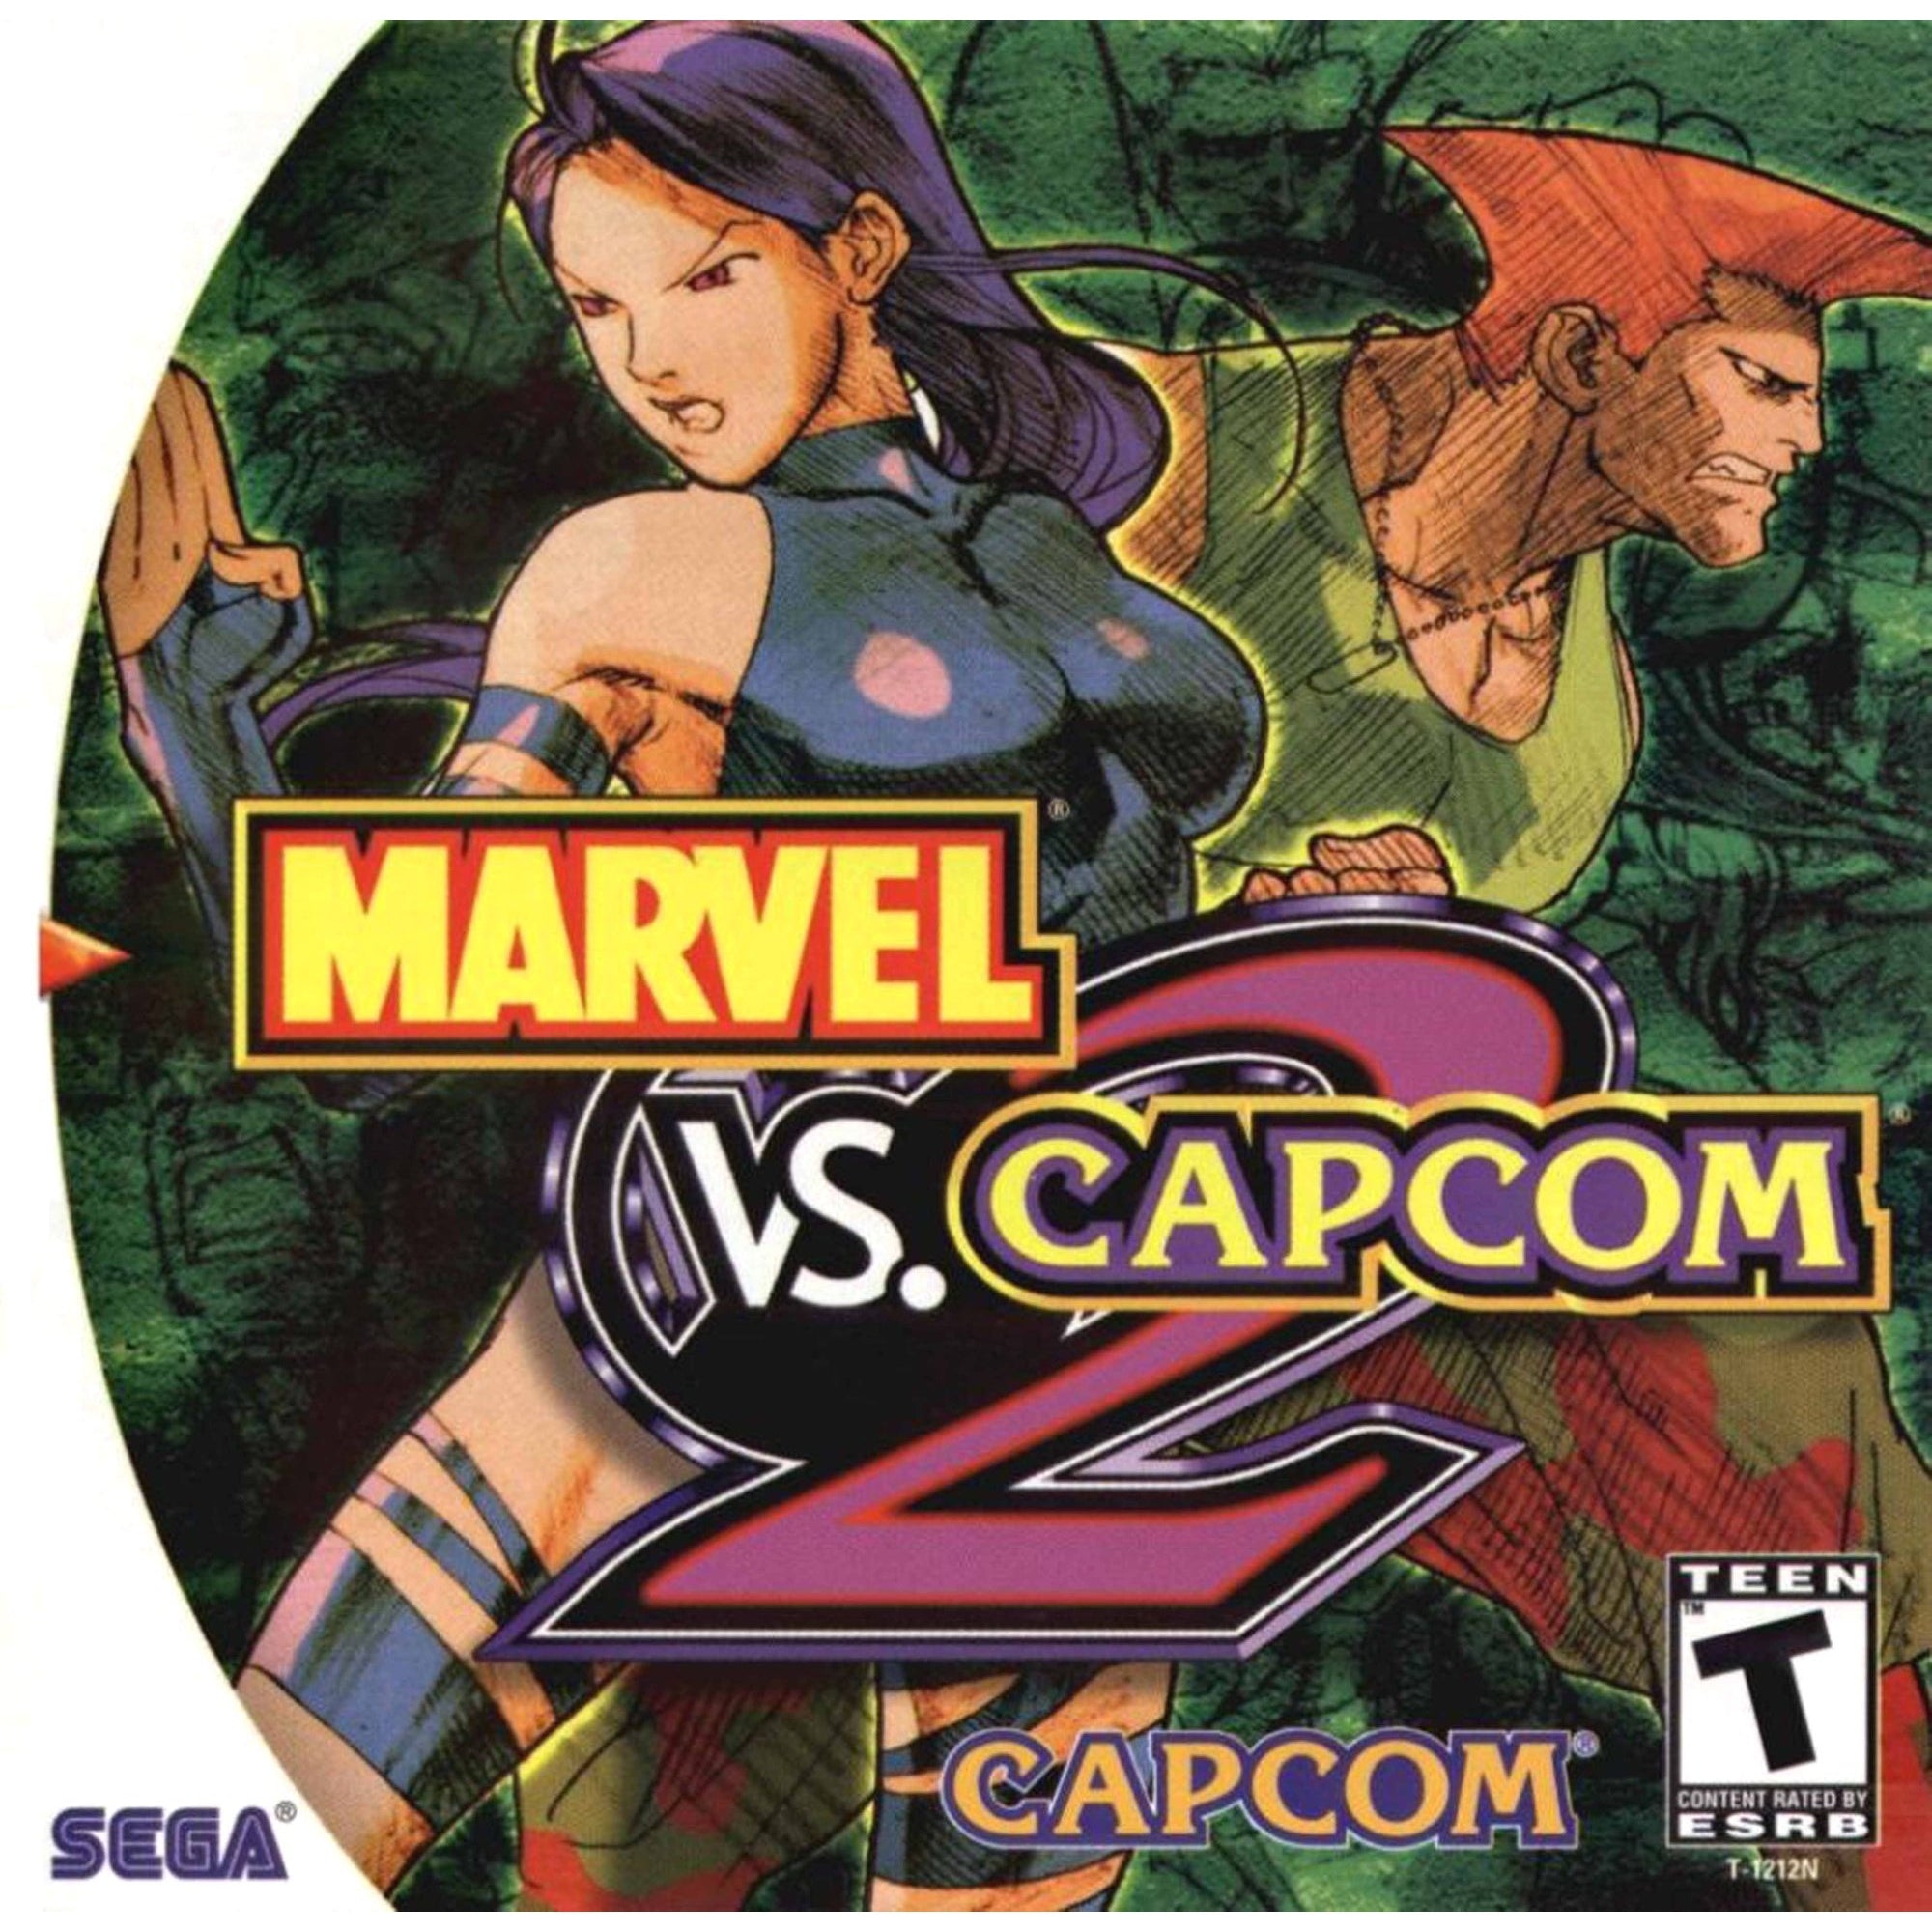 Marvel vs. Capcom 2 - Sega Dreamcast Game Complete - YourGamingShop.com - Buy, Sell, Trade Video Games Online. 120 Day Warranty. Satisfaction Guaranteed.